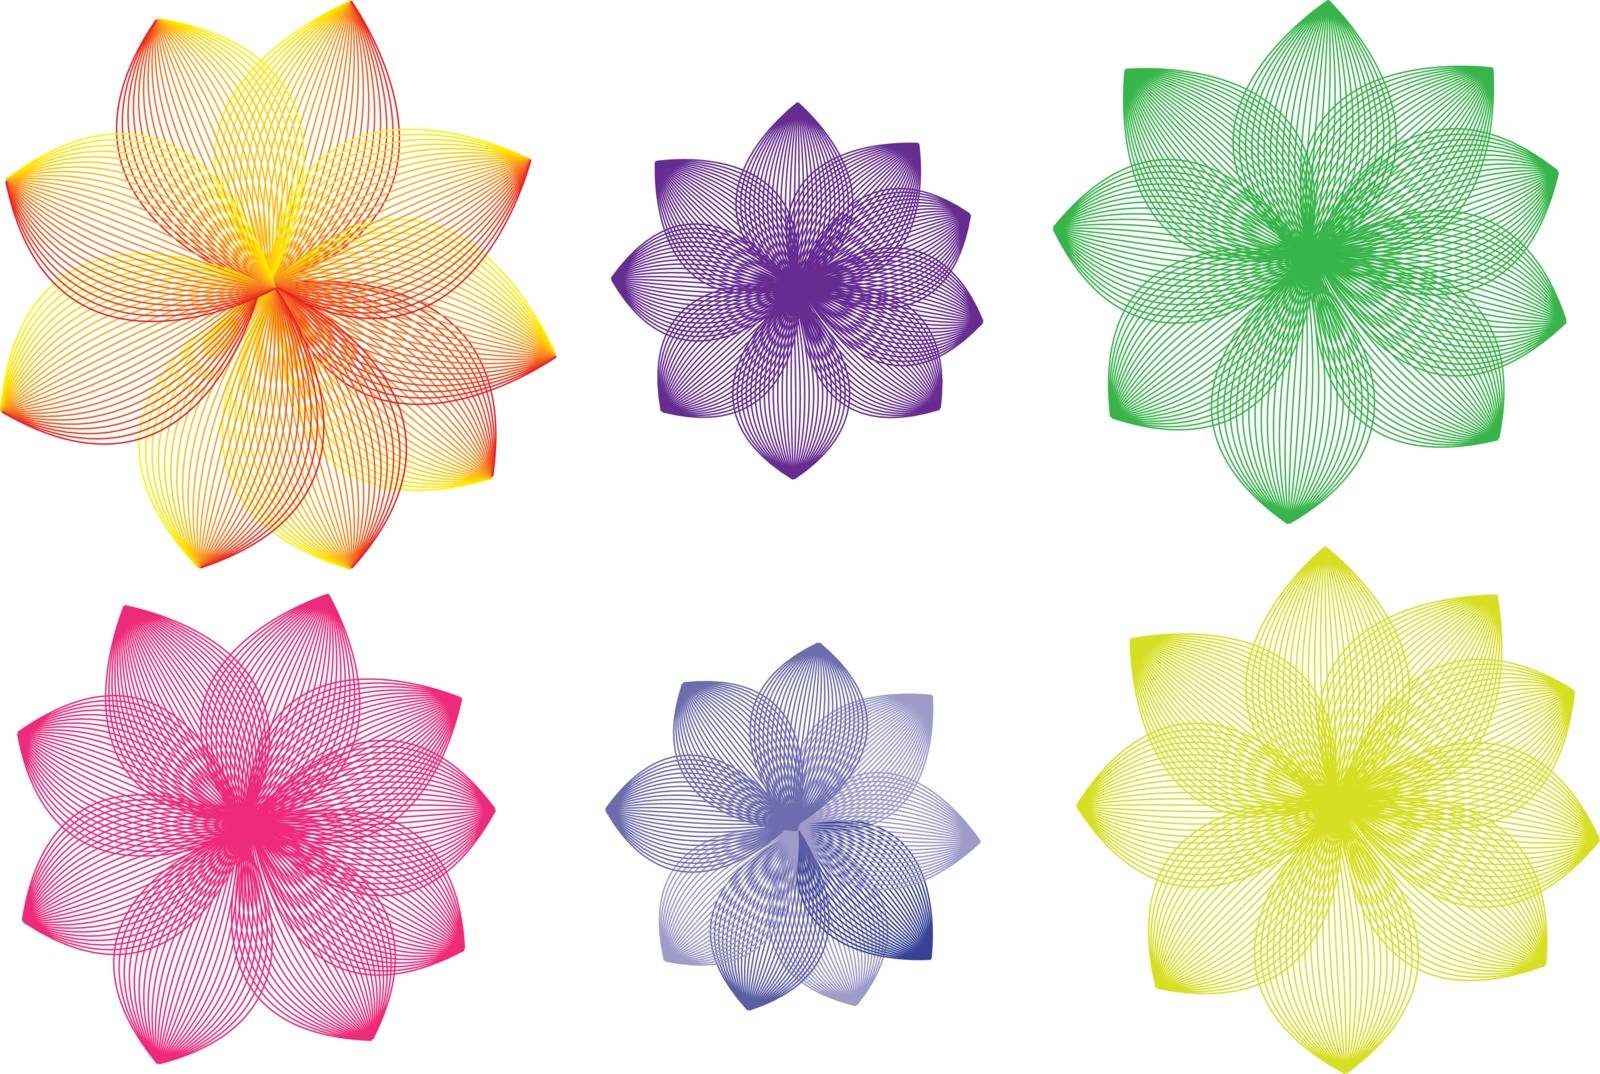 Color variations of floral background.